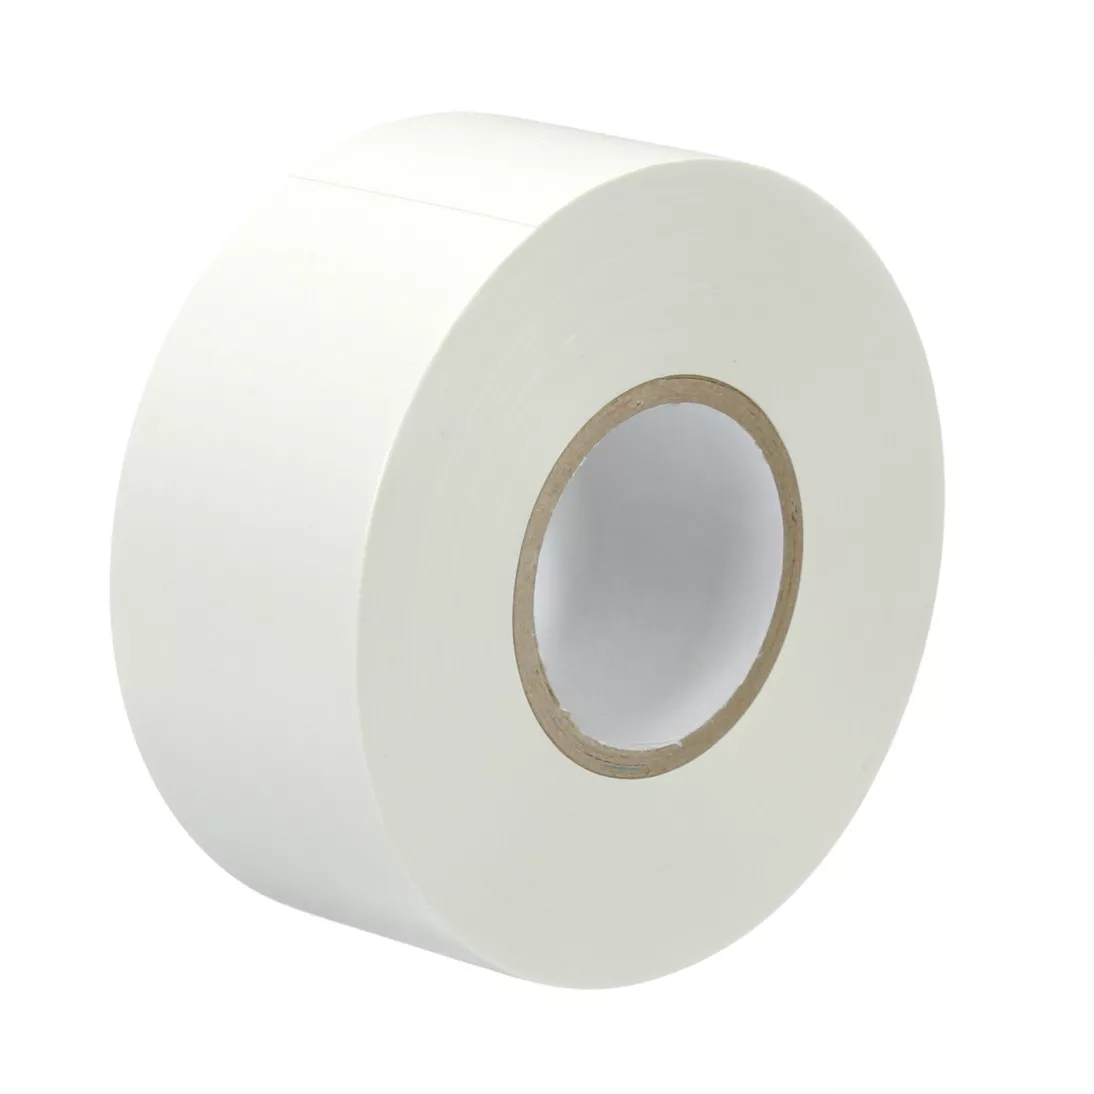 3M™ Selfwound PVC Tape 1506R, White , 1 1/2 in x 36 yd, 6 mil, 24 rolls
per case